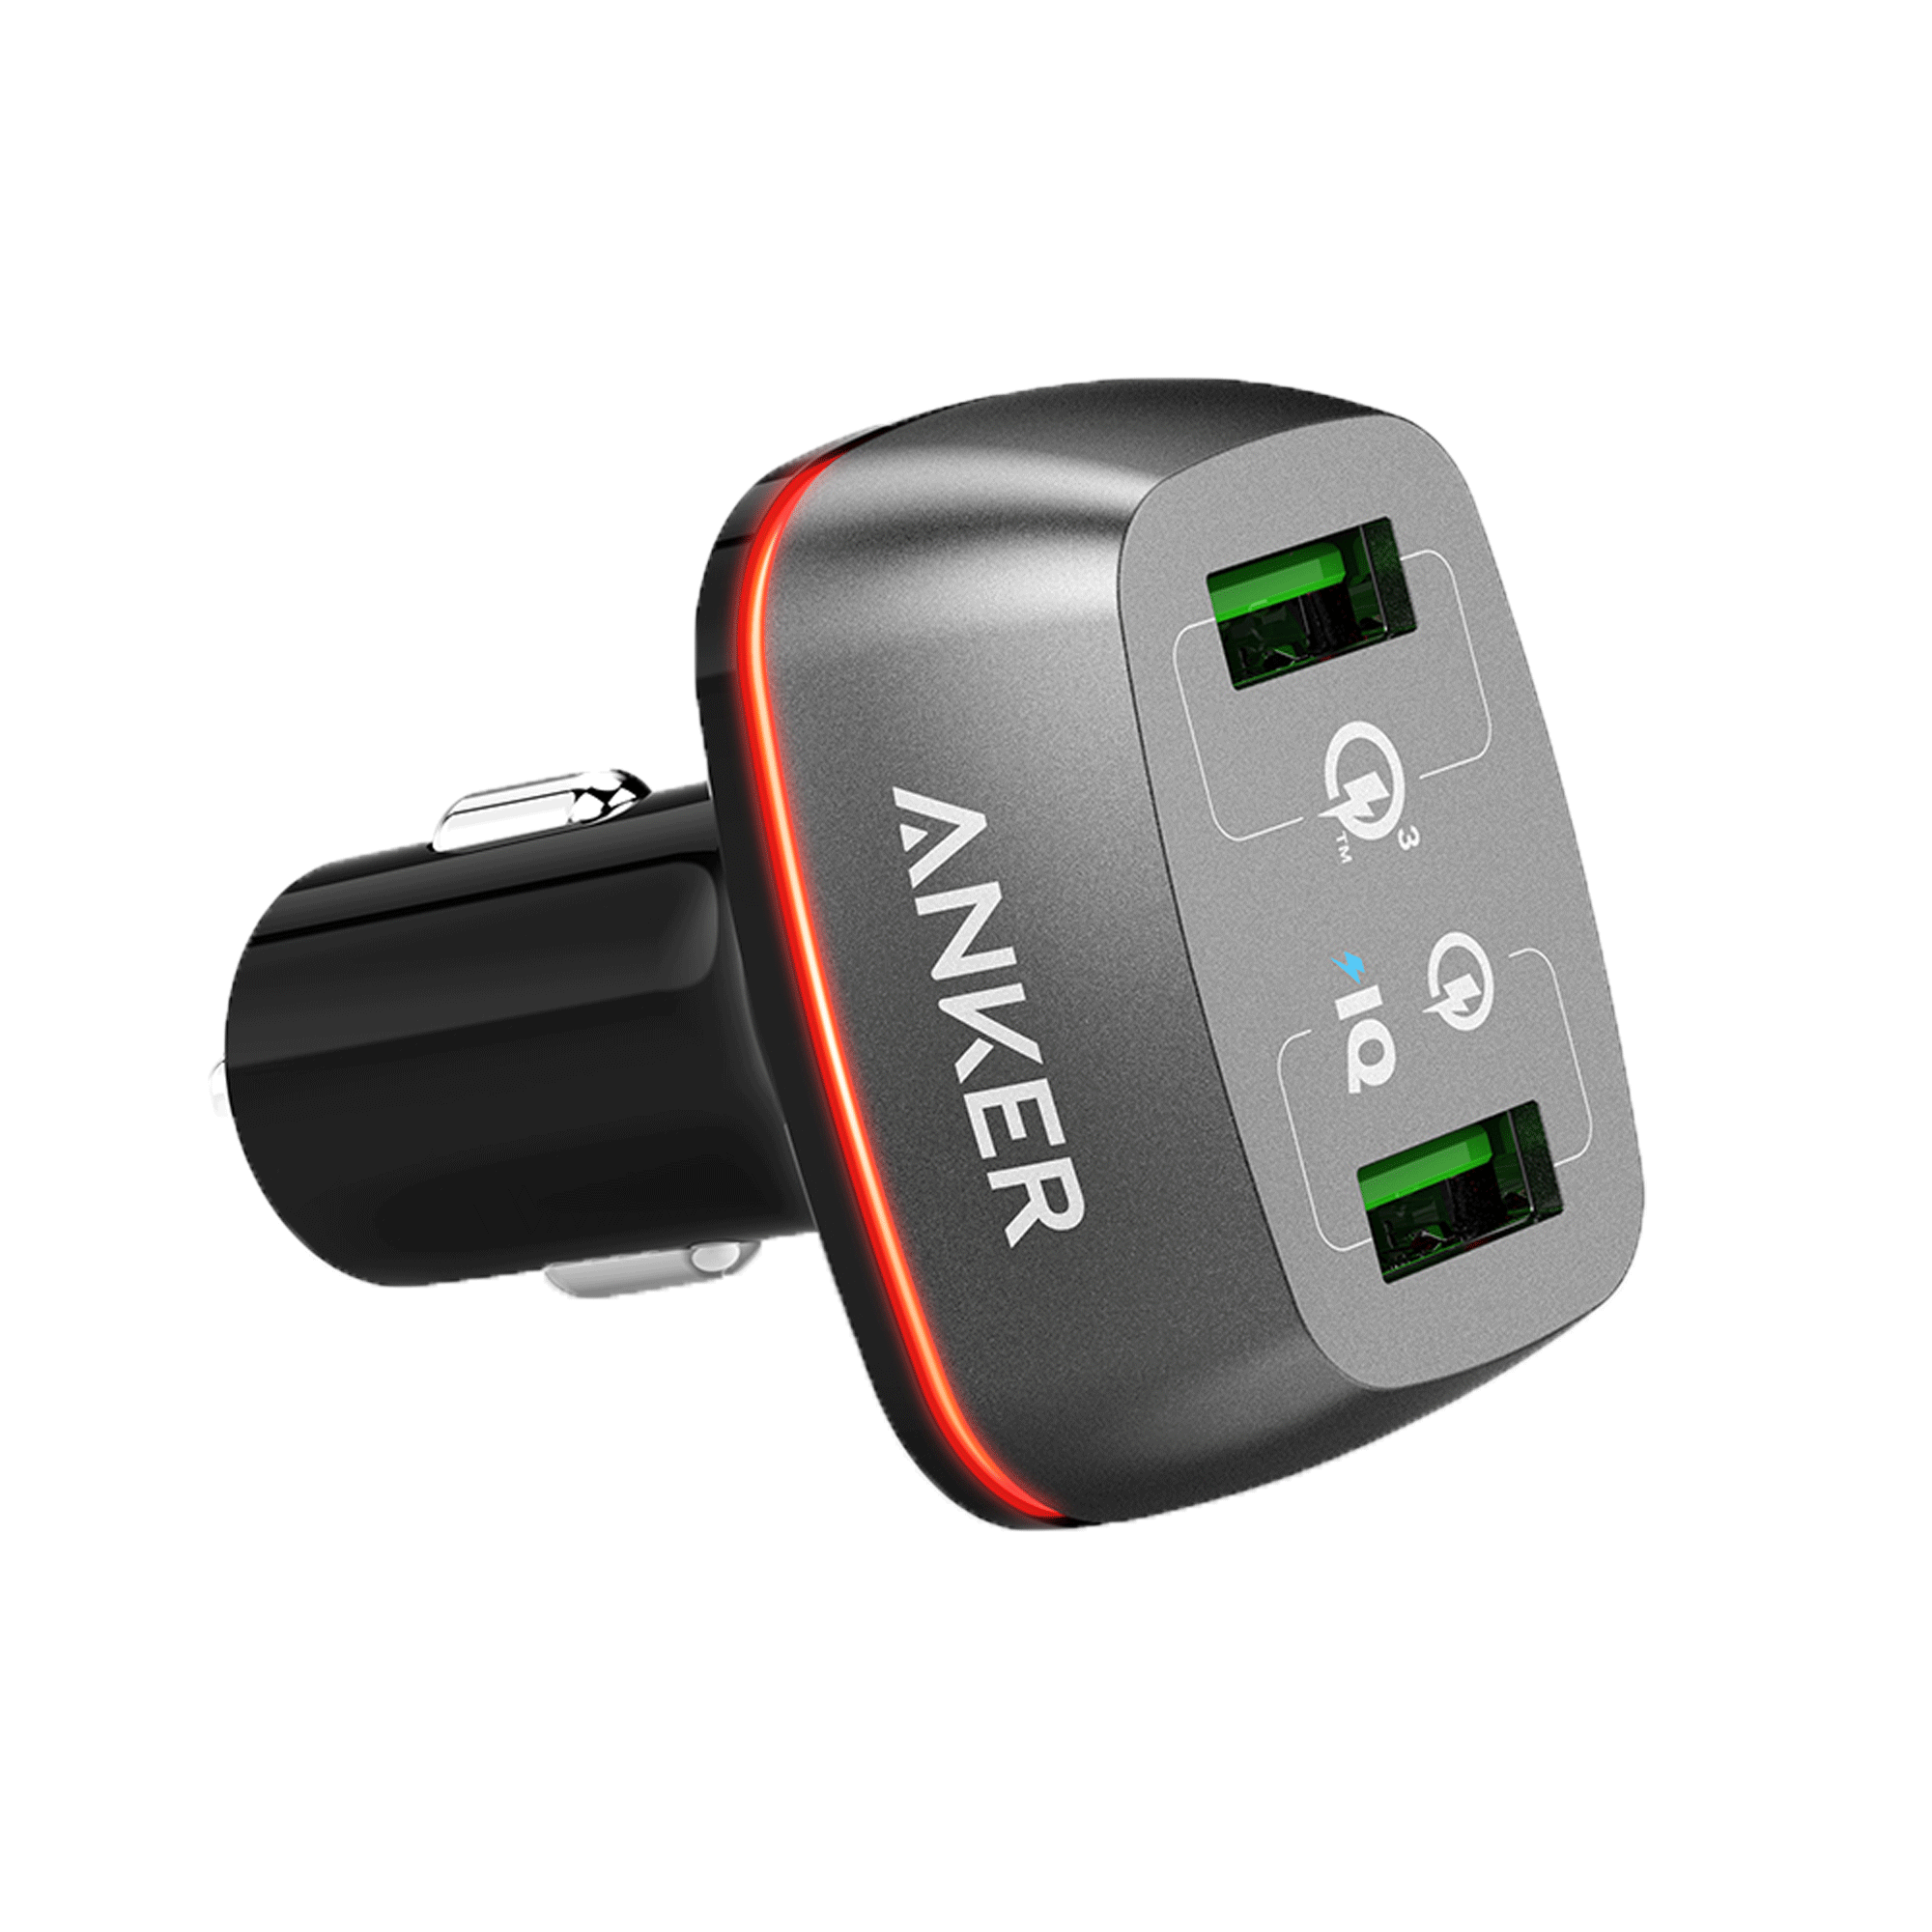 Anker PowerDrive+ 2 42W QuickCharge 3.0 Hızlı Araç Şarj Cihazı